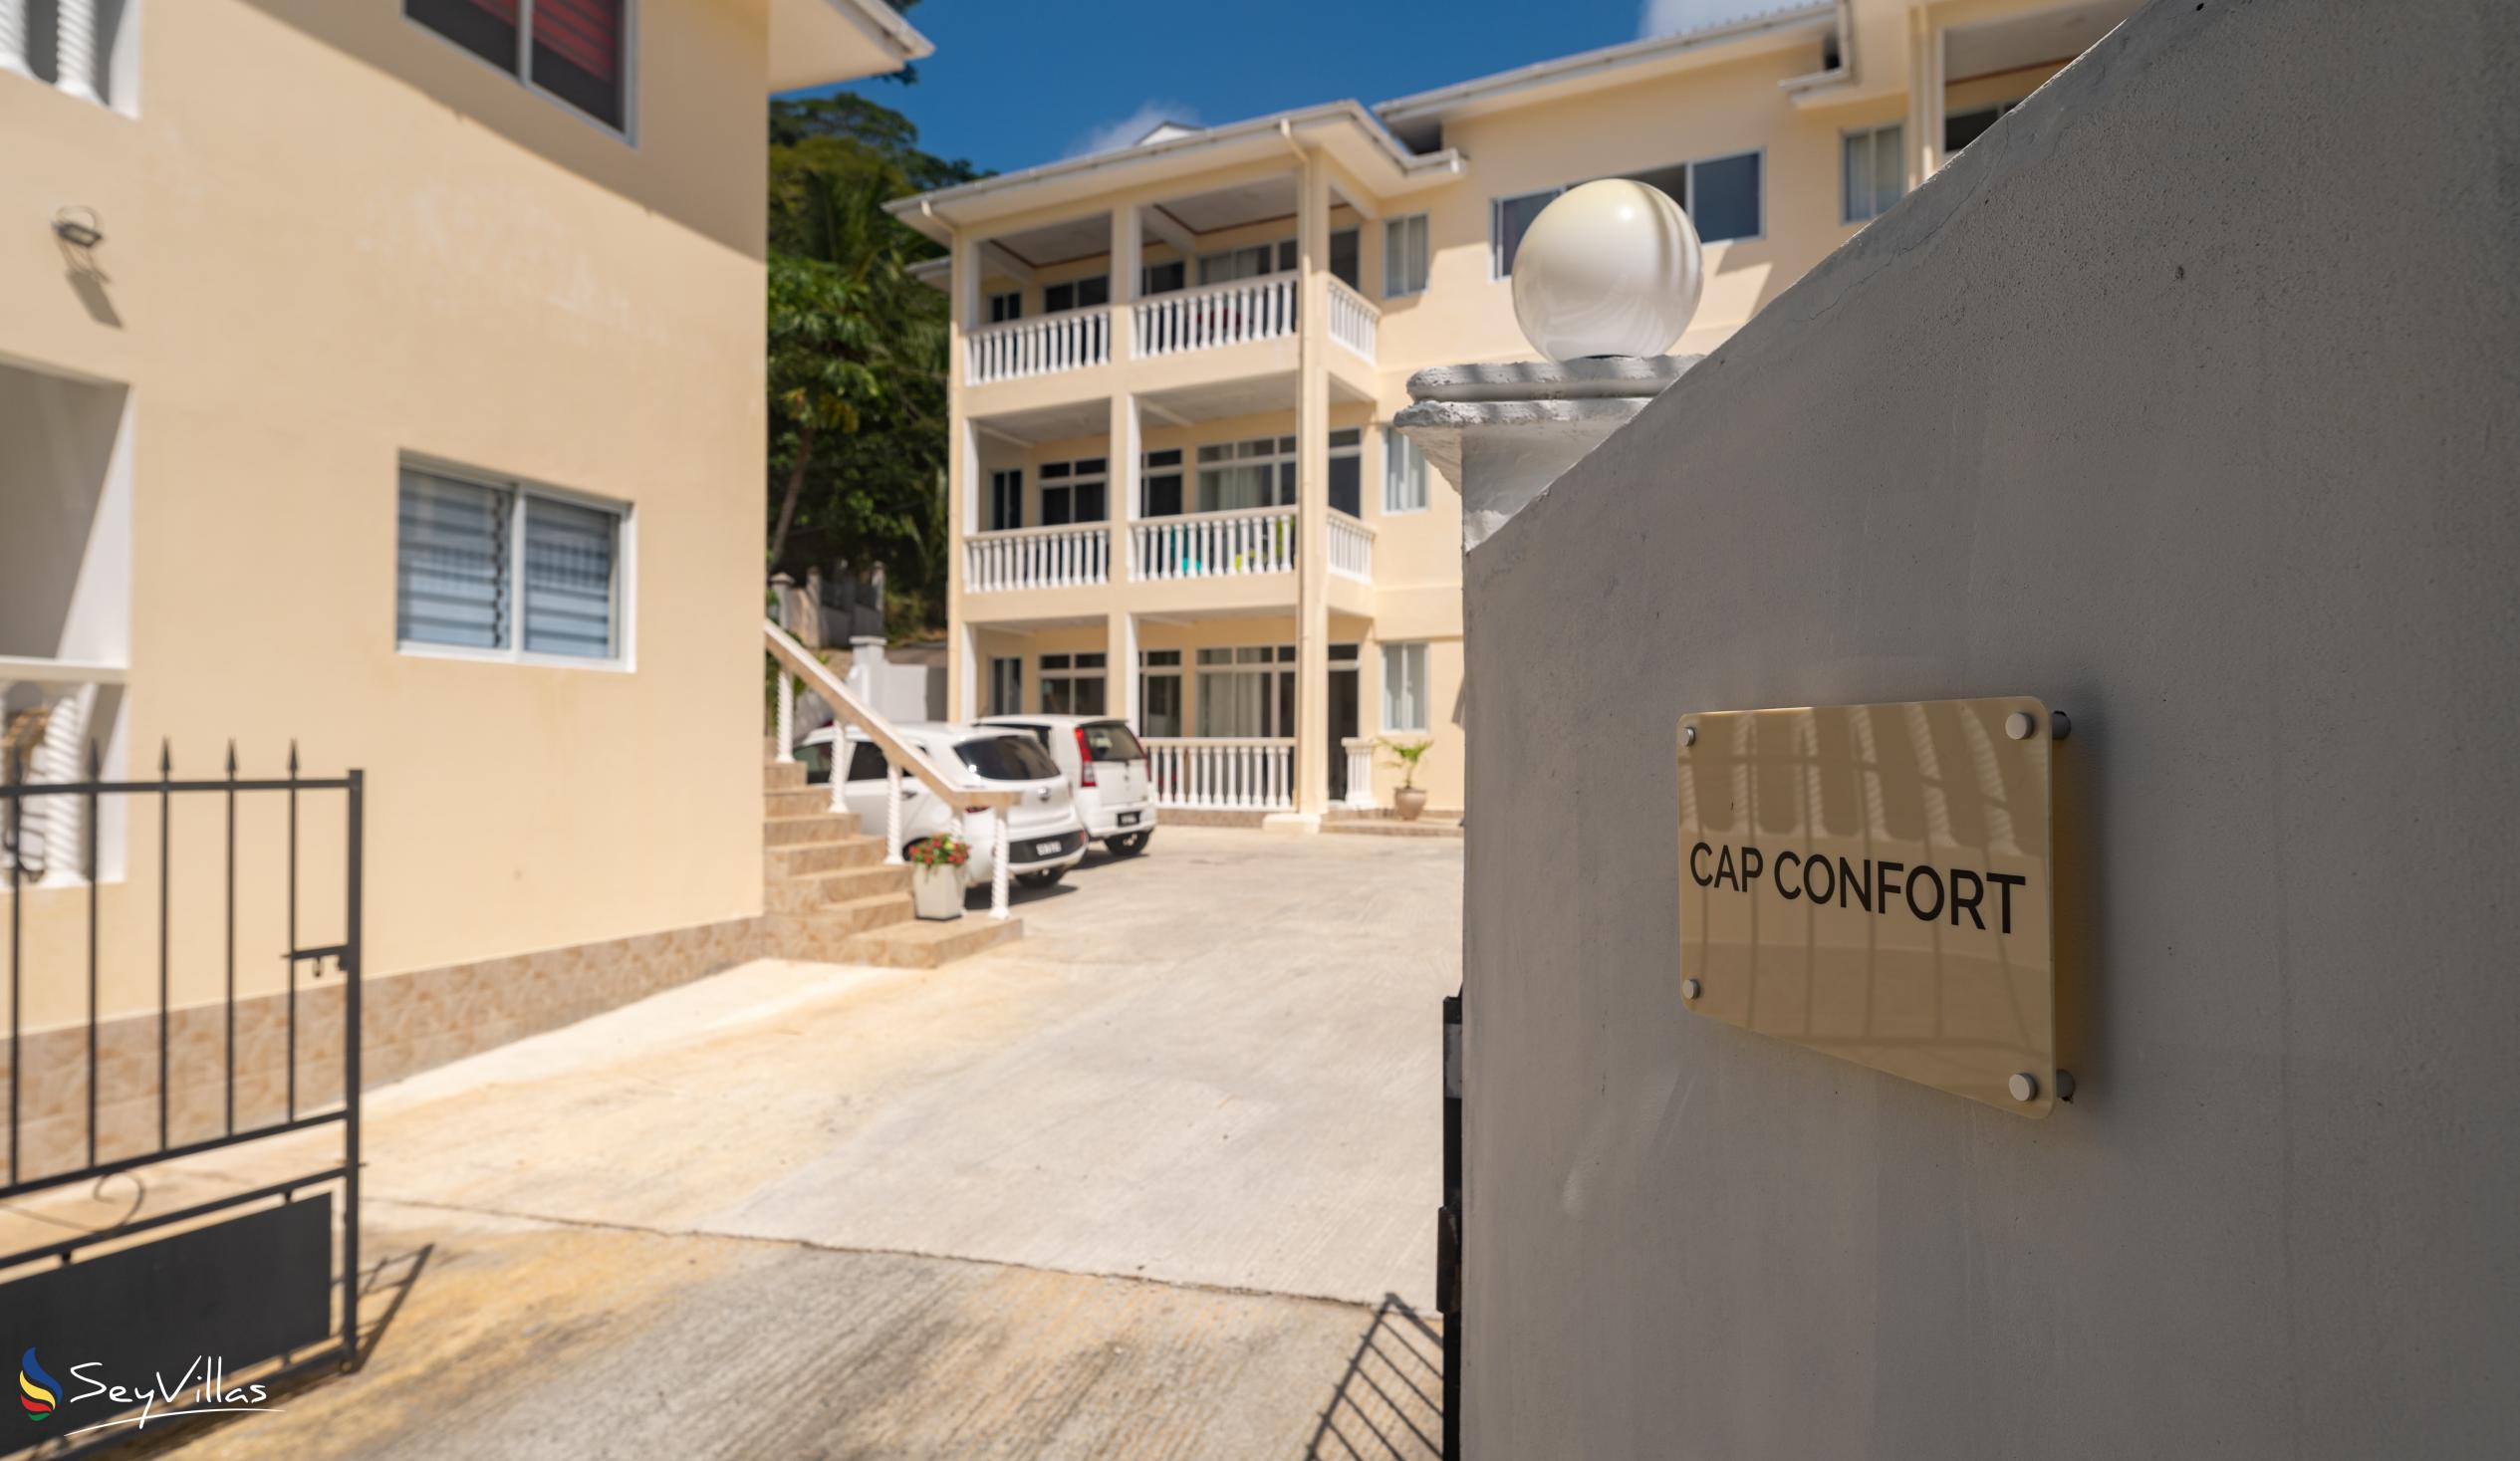 Photo 18: Cap Confort - Outdoor area - Mahé (Seychelles)